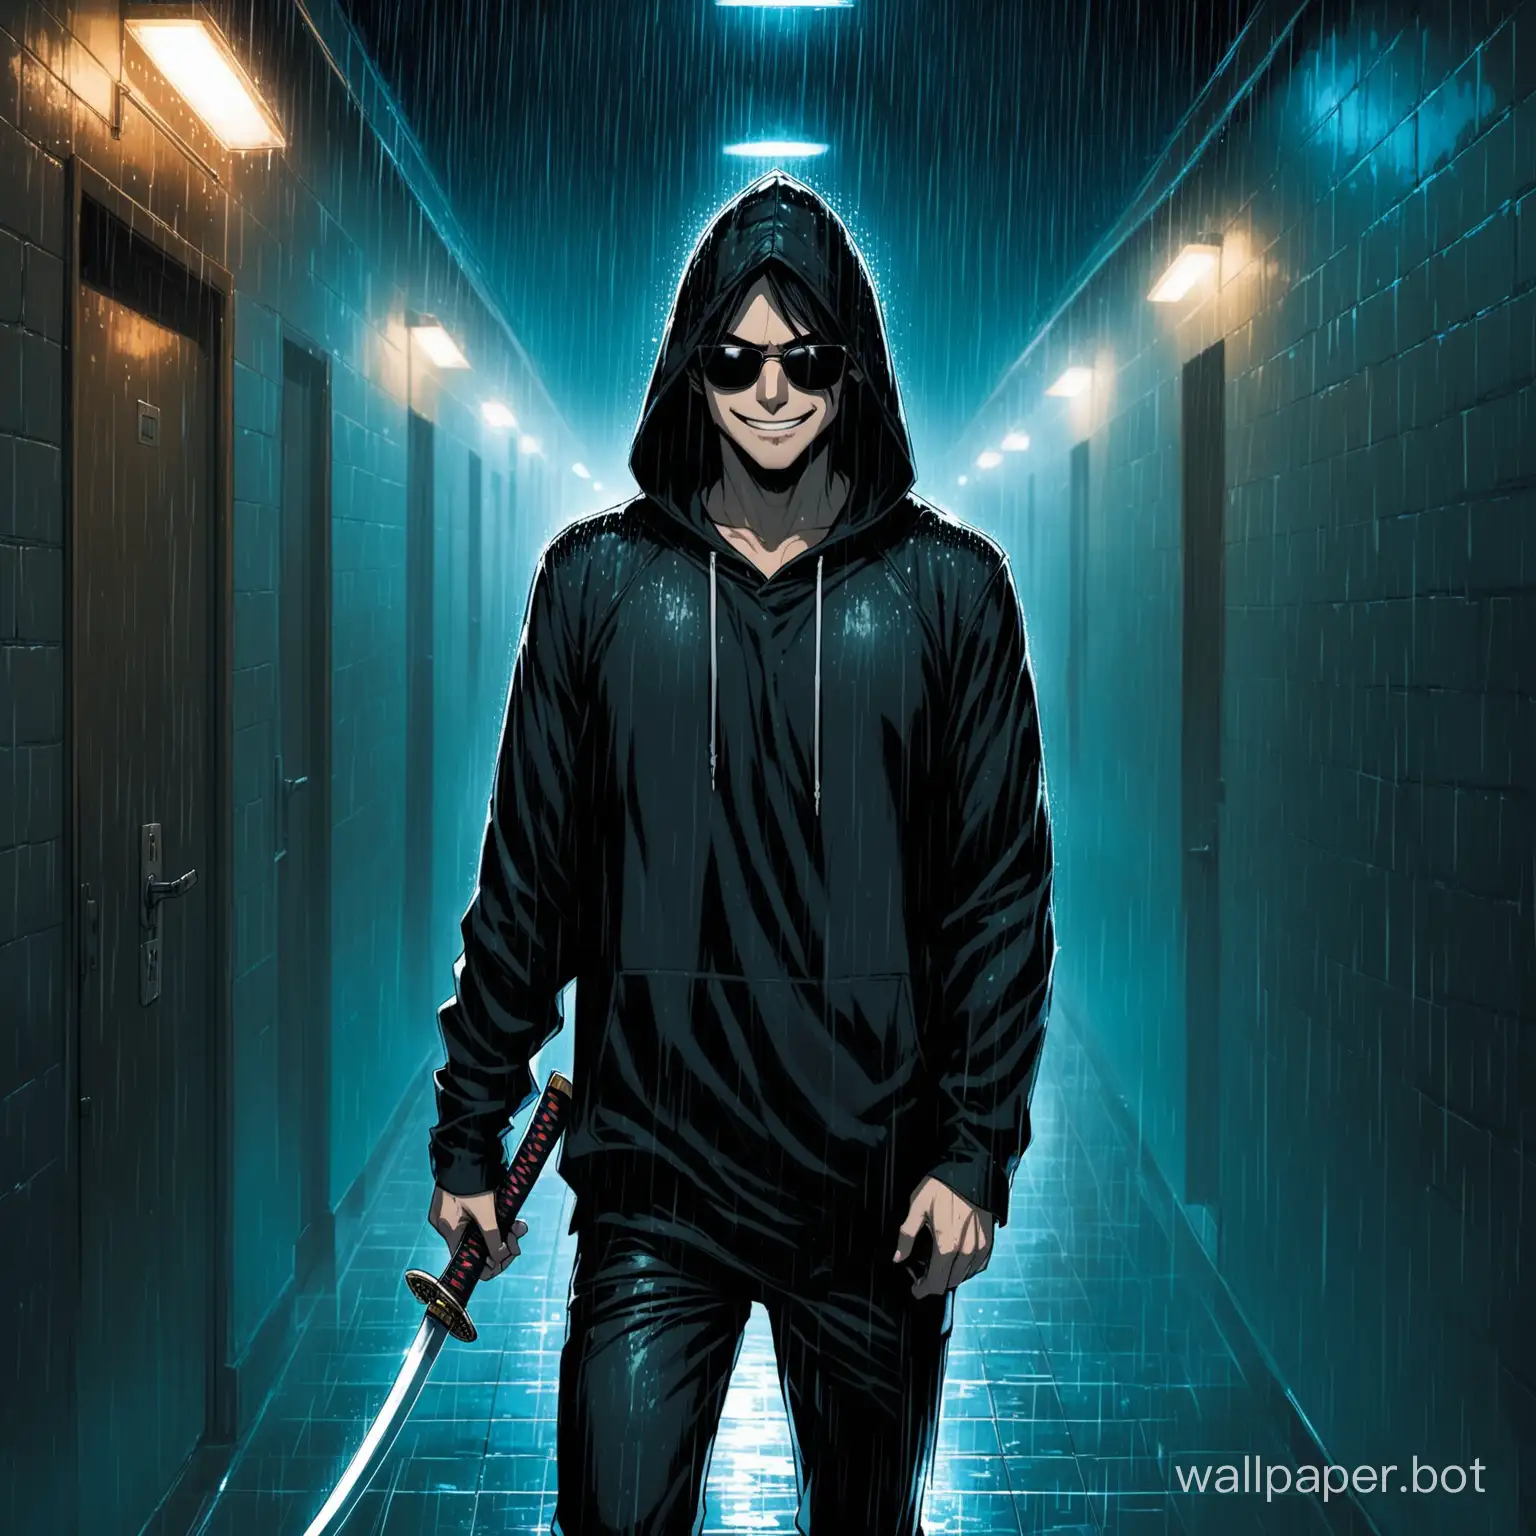 Sinister-Man-in-Black-Hoodie-with-Katana-in-Rainy-Night-Corridor